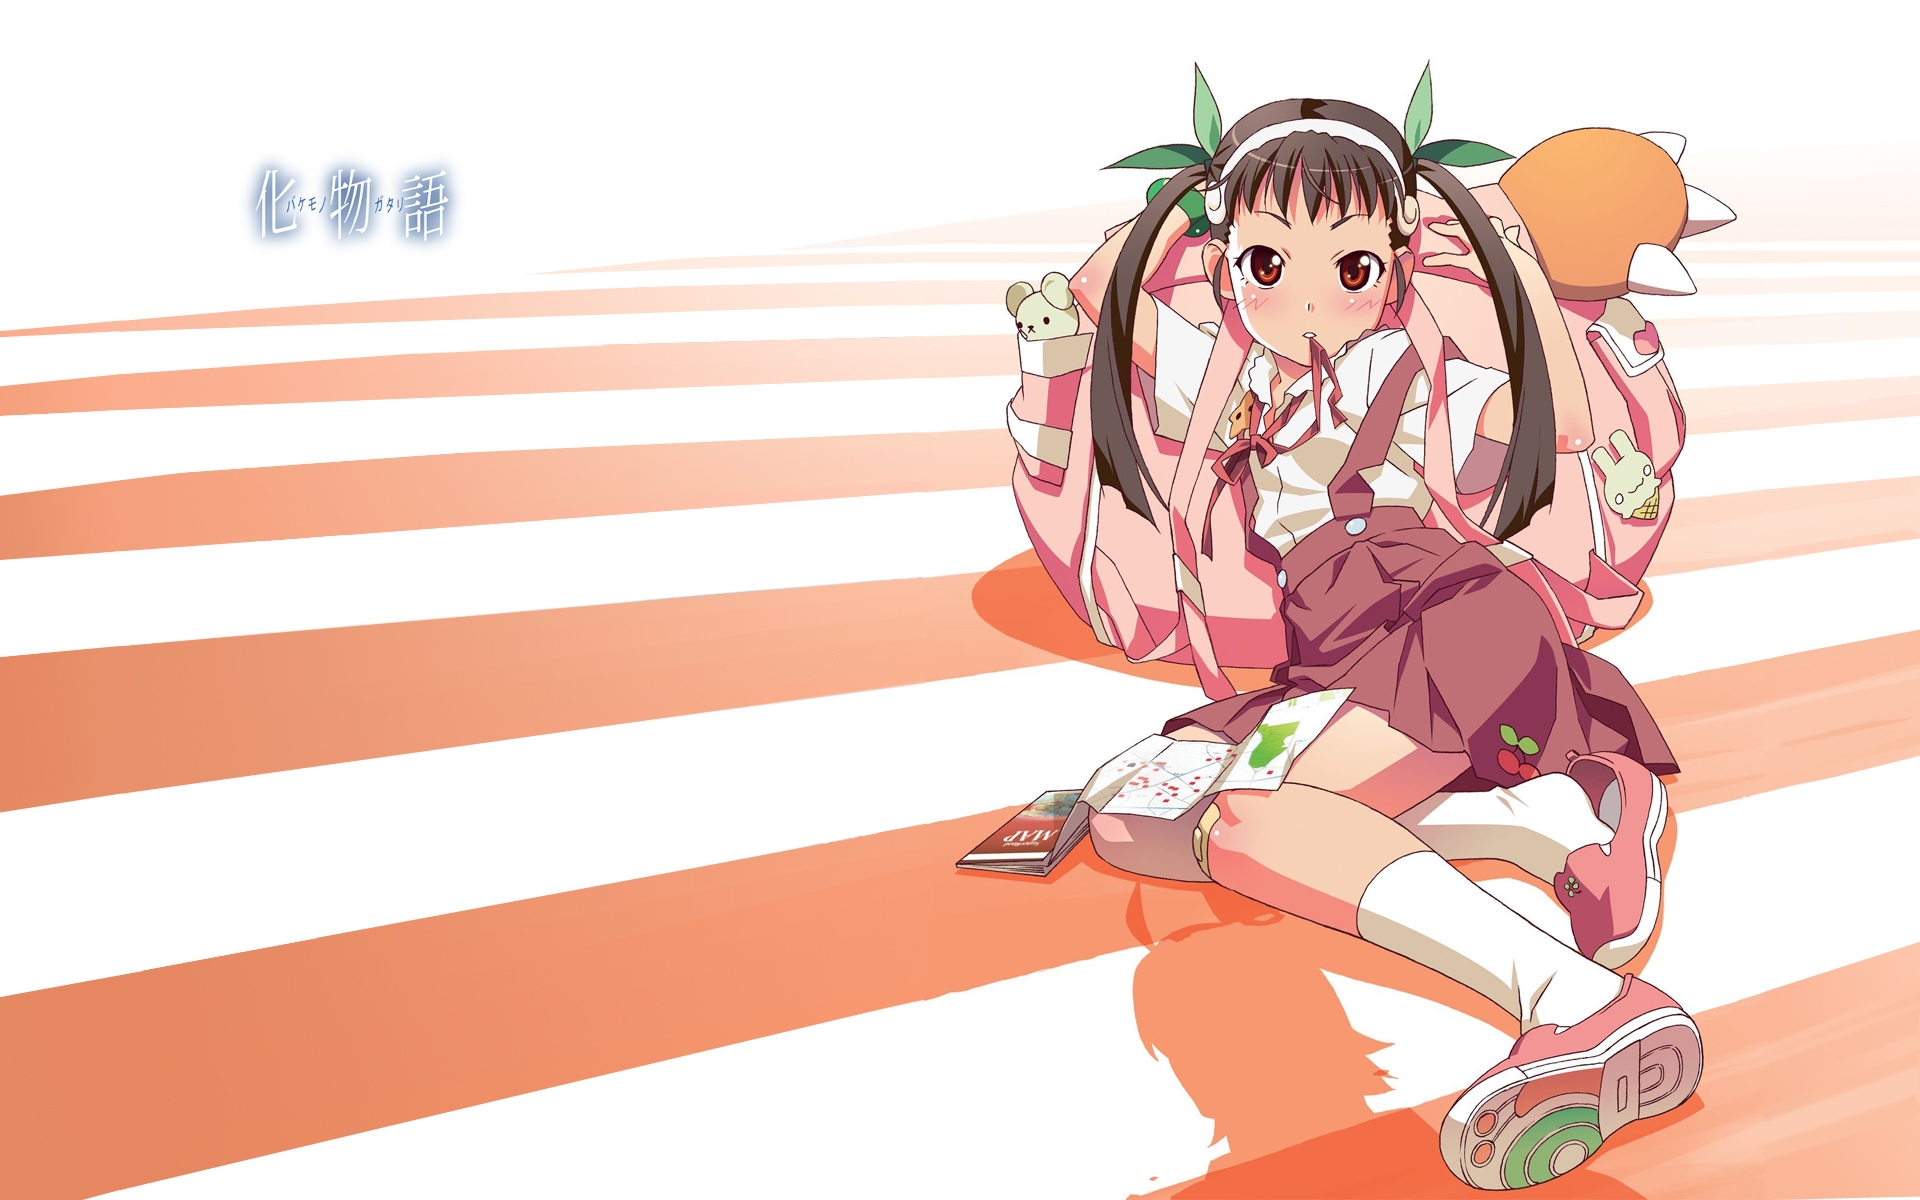 Descarga gratuita de fondo de pantalla para móvil de Animado, Monogatari (Serie), Mayoi Hachikuji.